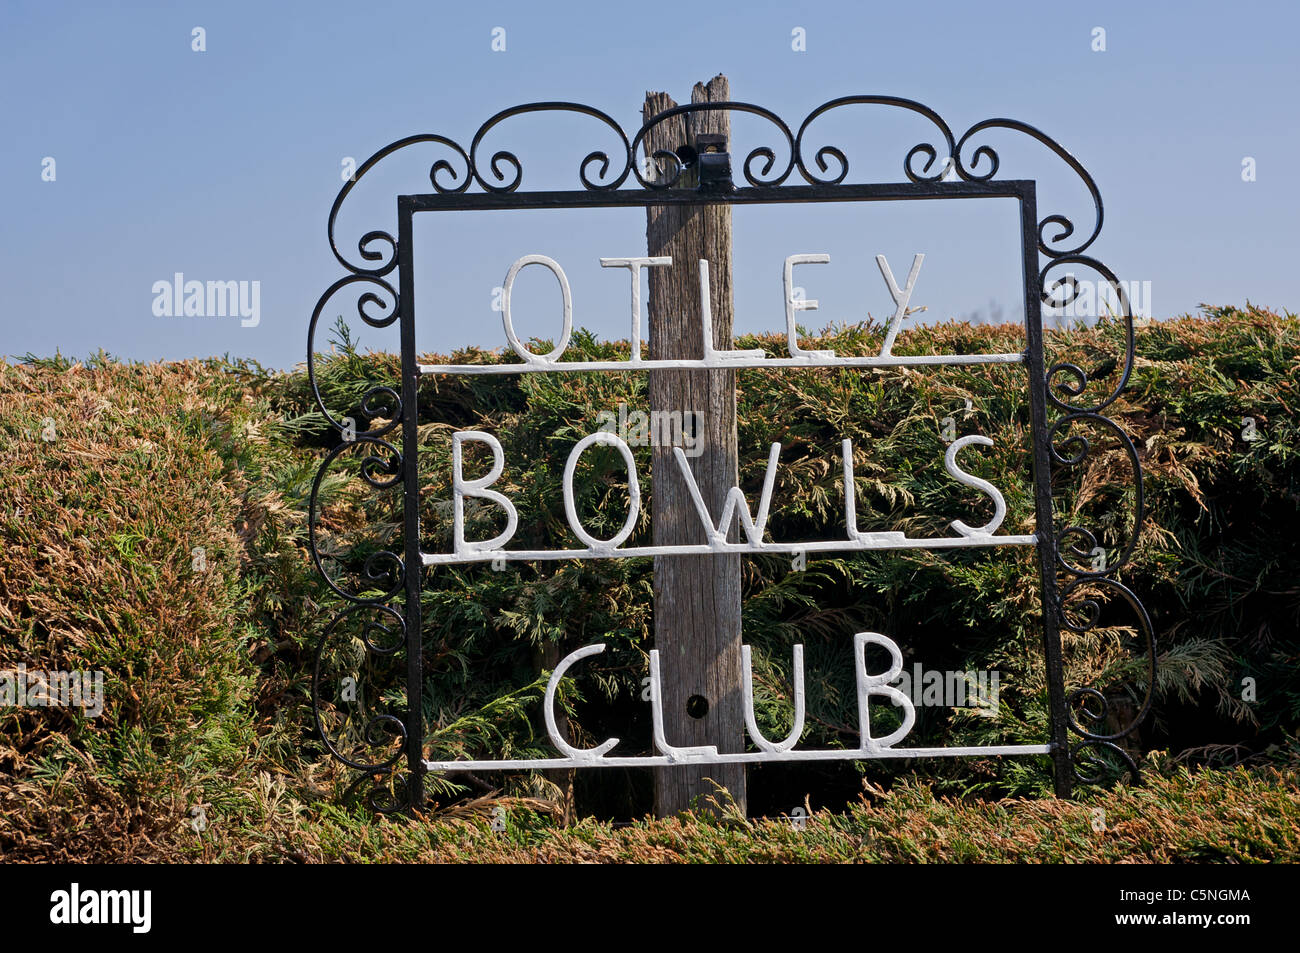 Otley bowls club signe, Suffolk, UK. Banque D'Images